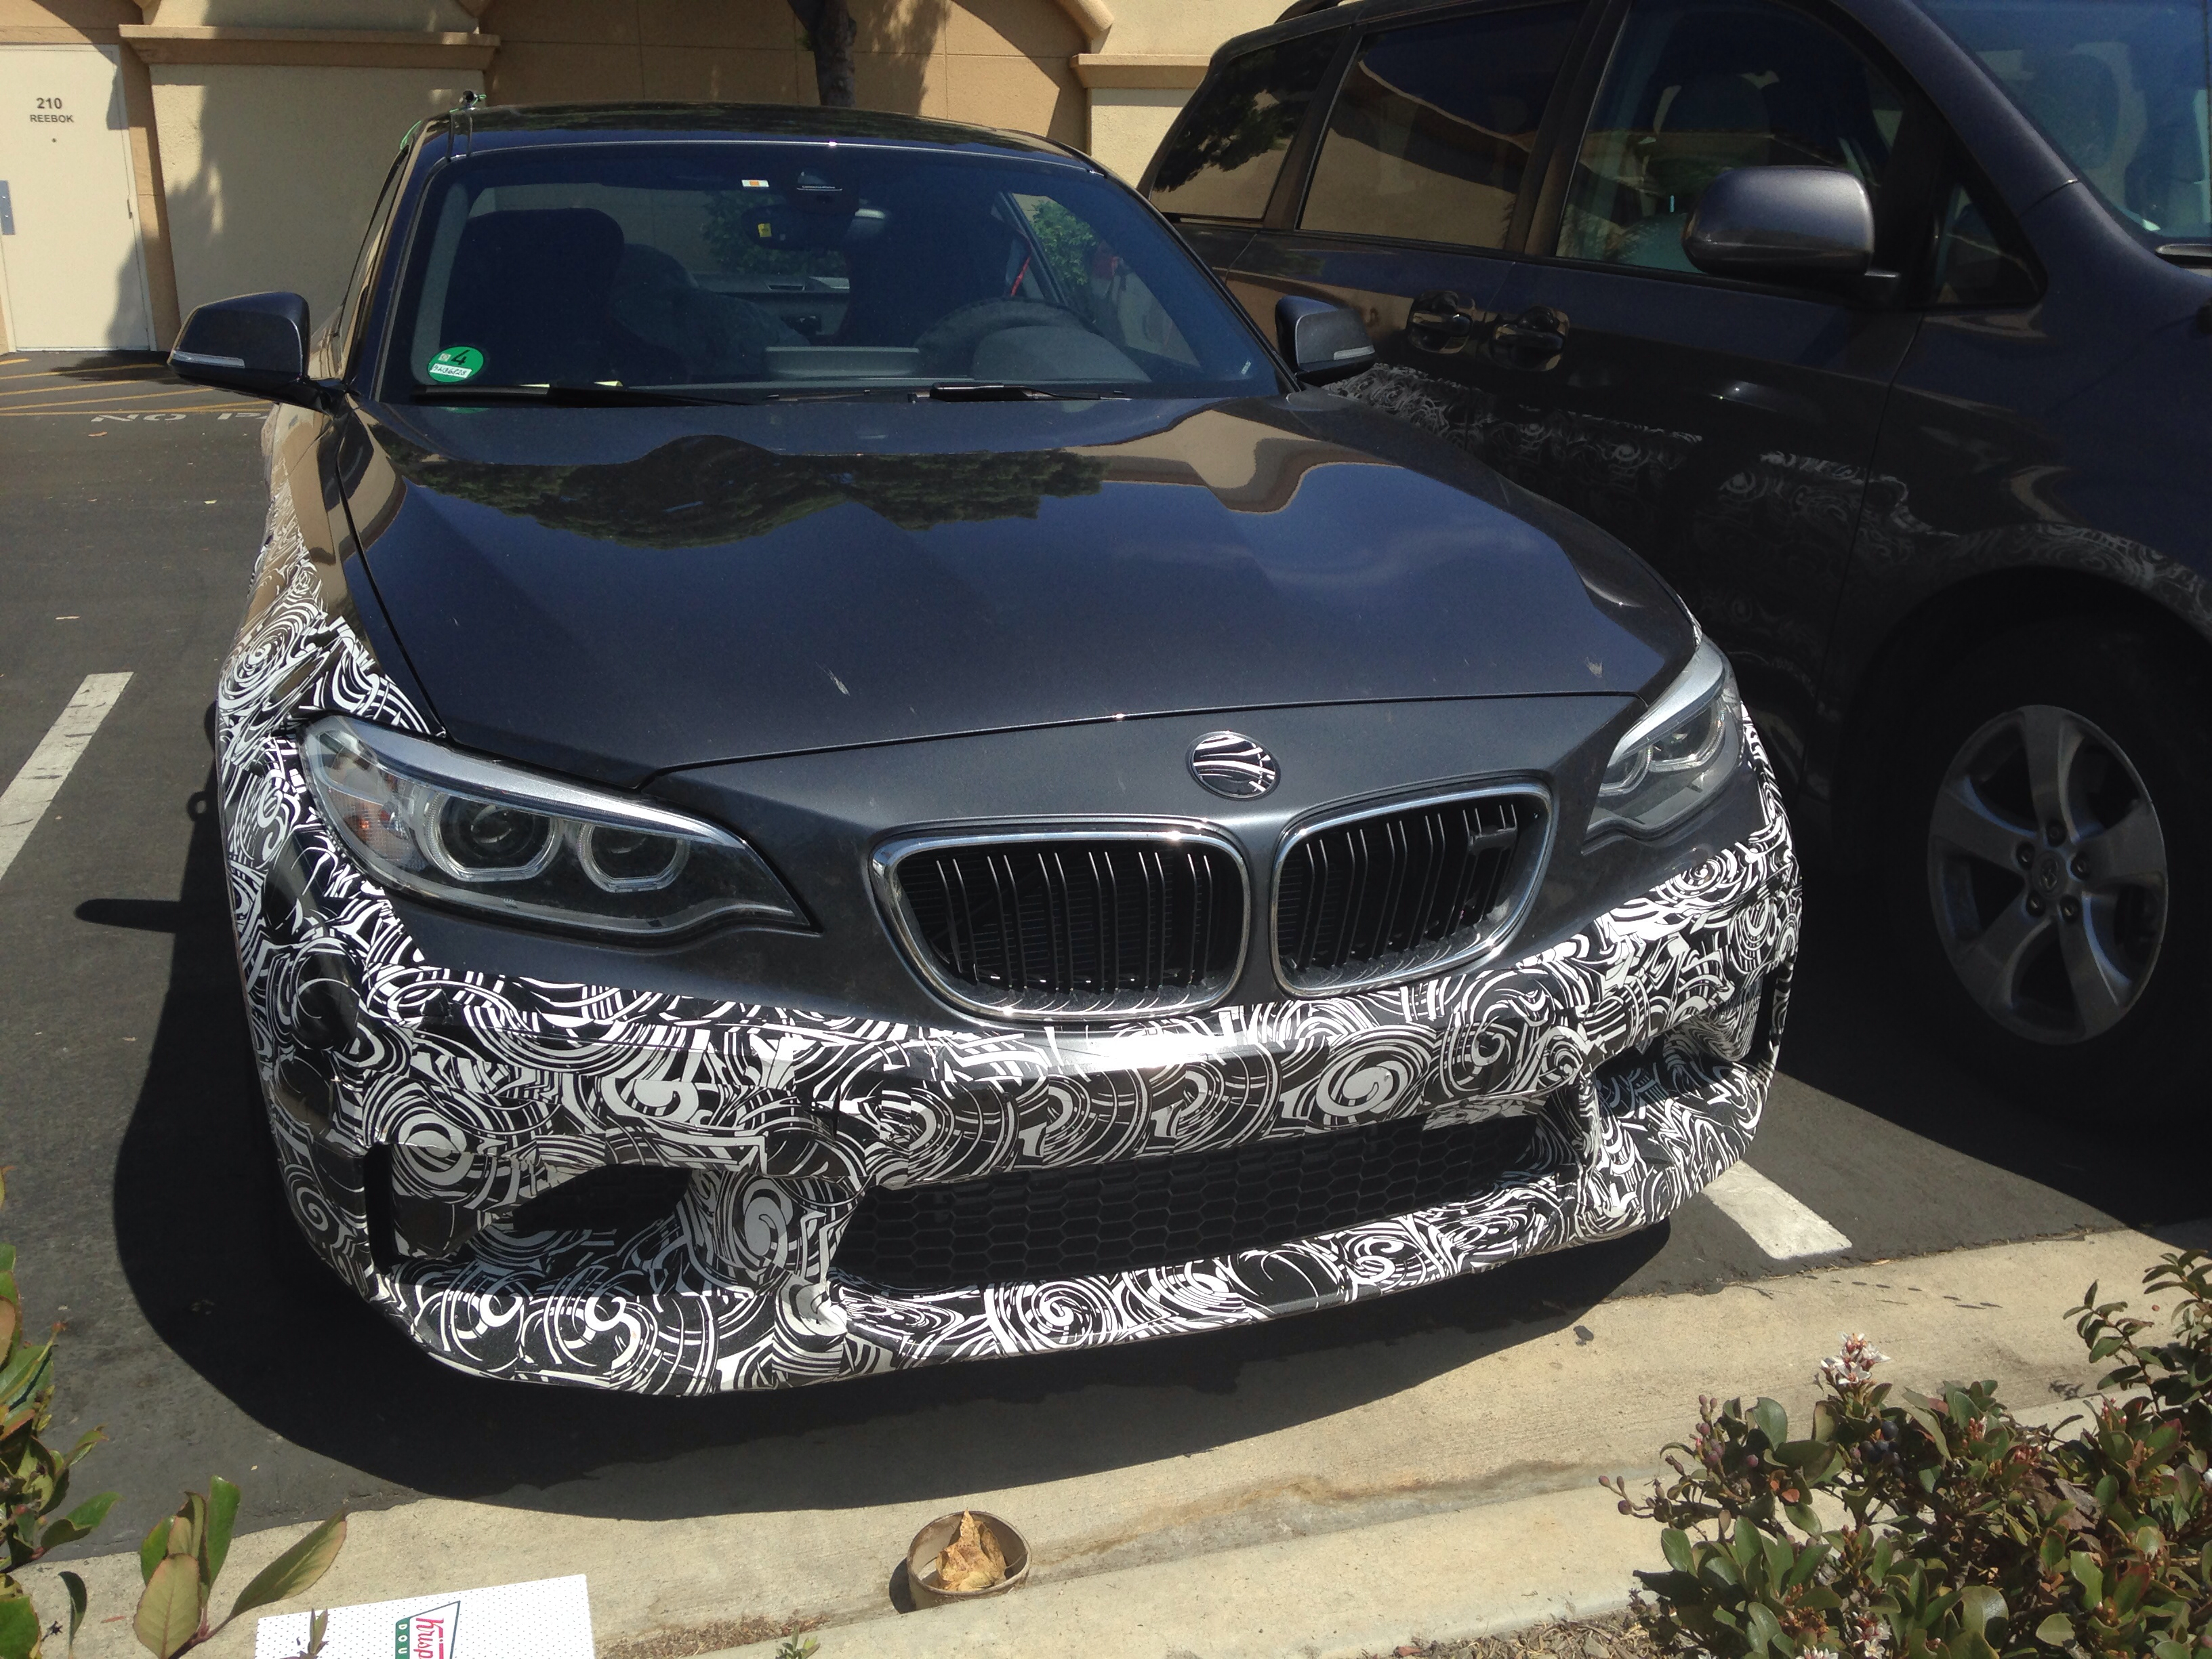 2016 BMW M2s Shot Down in California